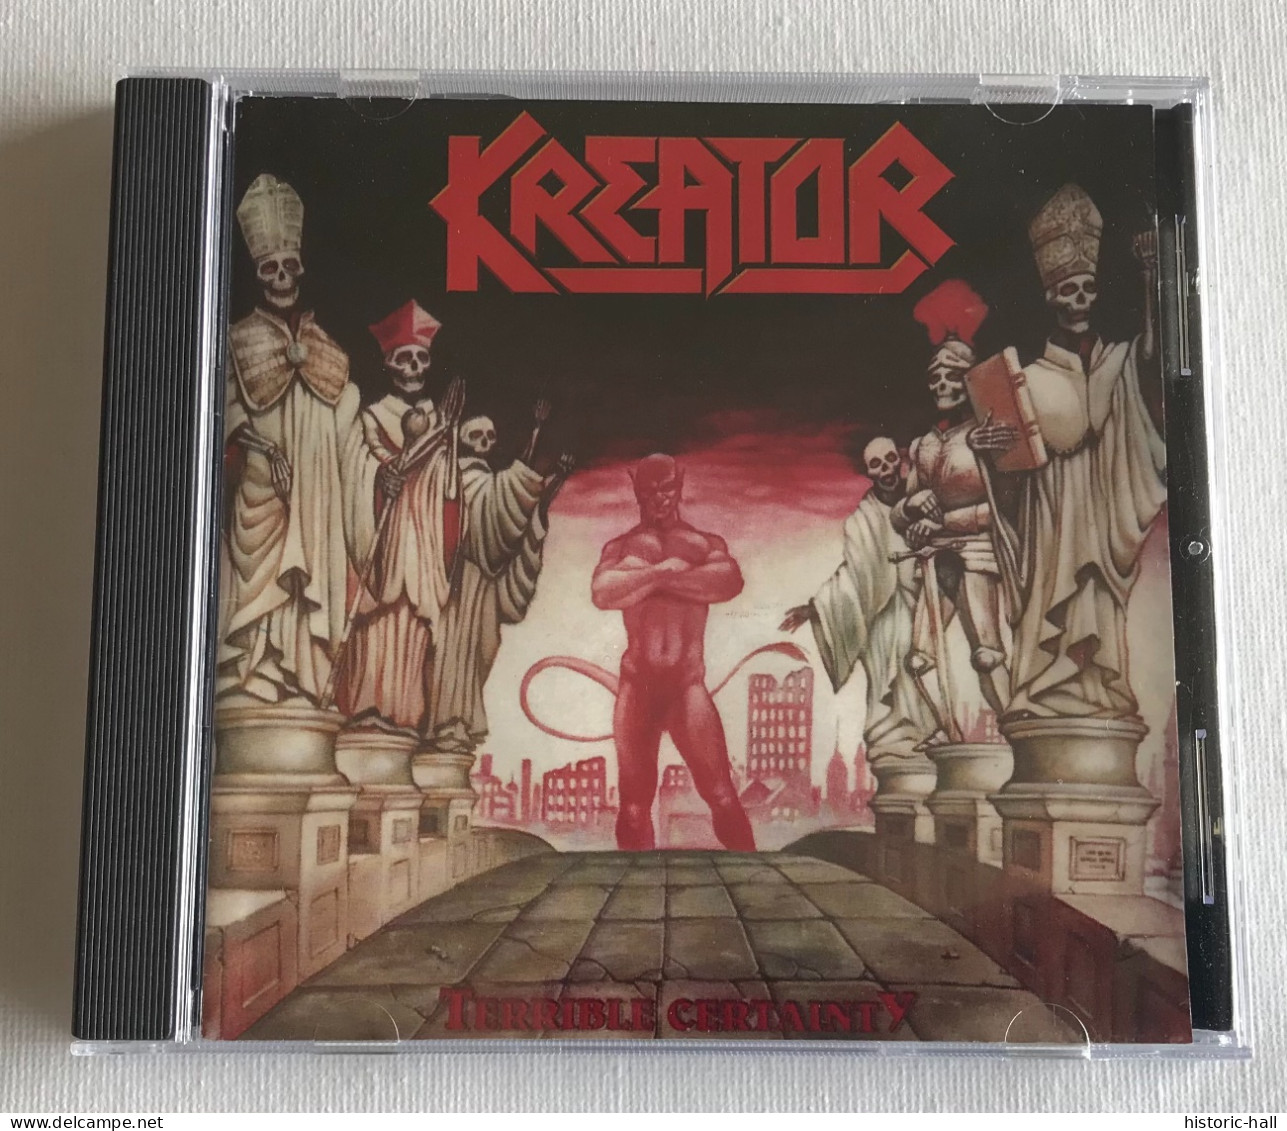 KREATOR - Terrible Certainty - CD - 1987/97  - Russian Press - Hard Rock & Metal